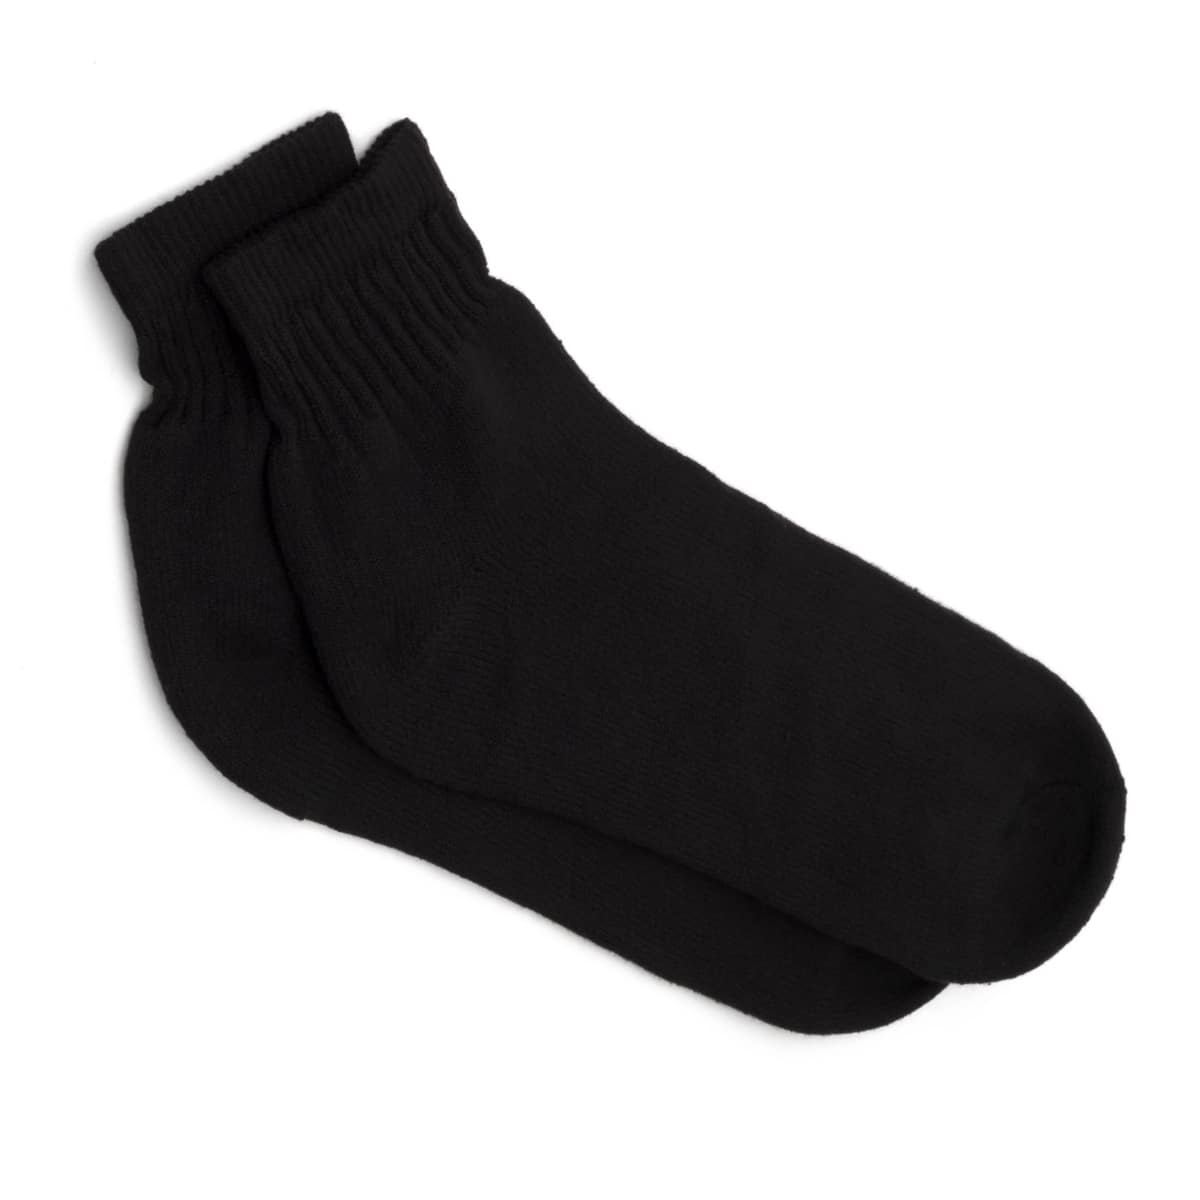 black ankle socks - black quarter socks